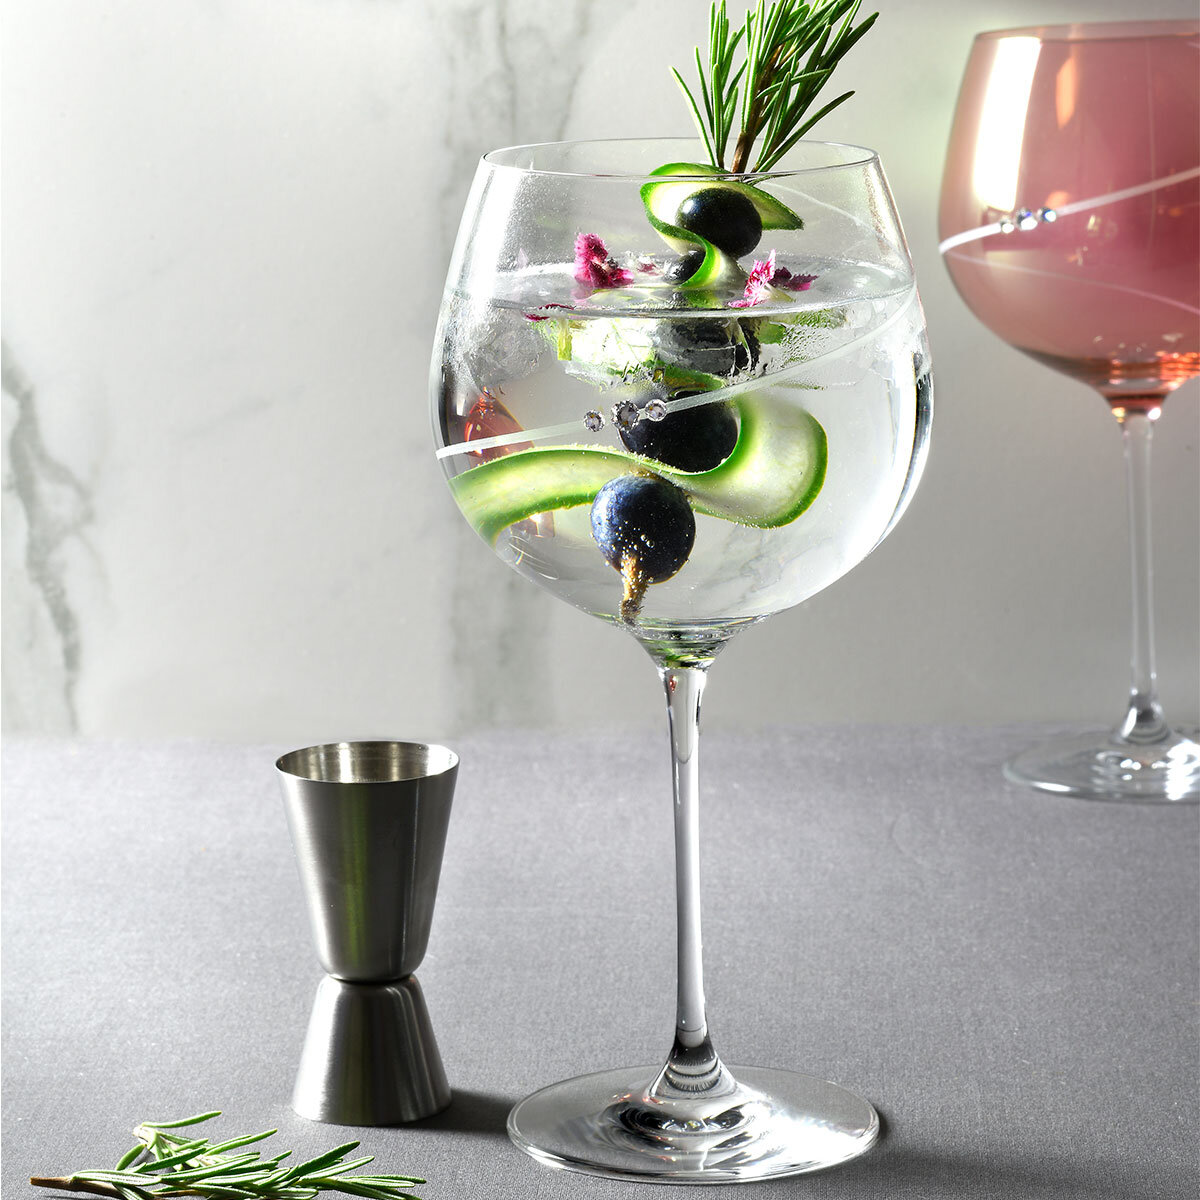 Portmeirion Auris Gin Glasses with Swarovski Crystals, 4 Piece